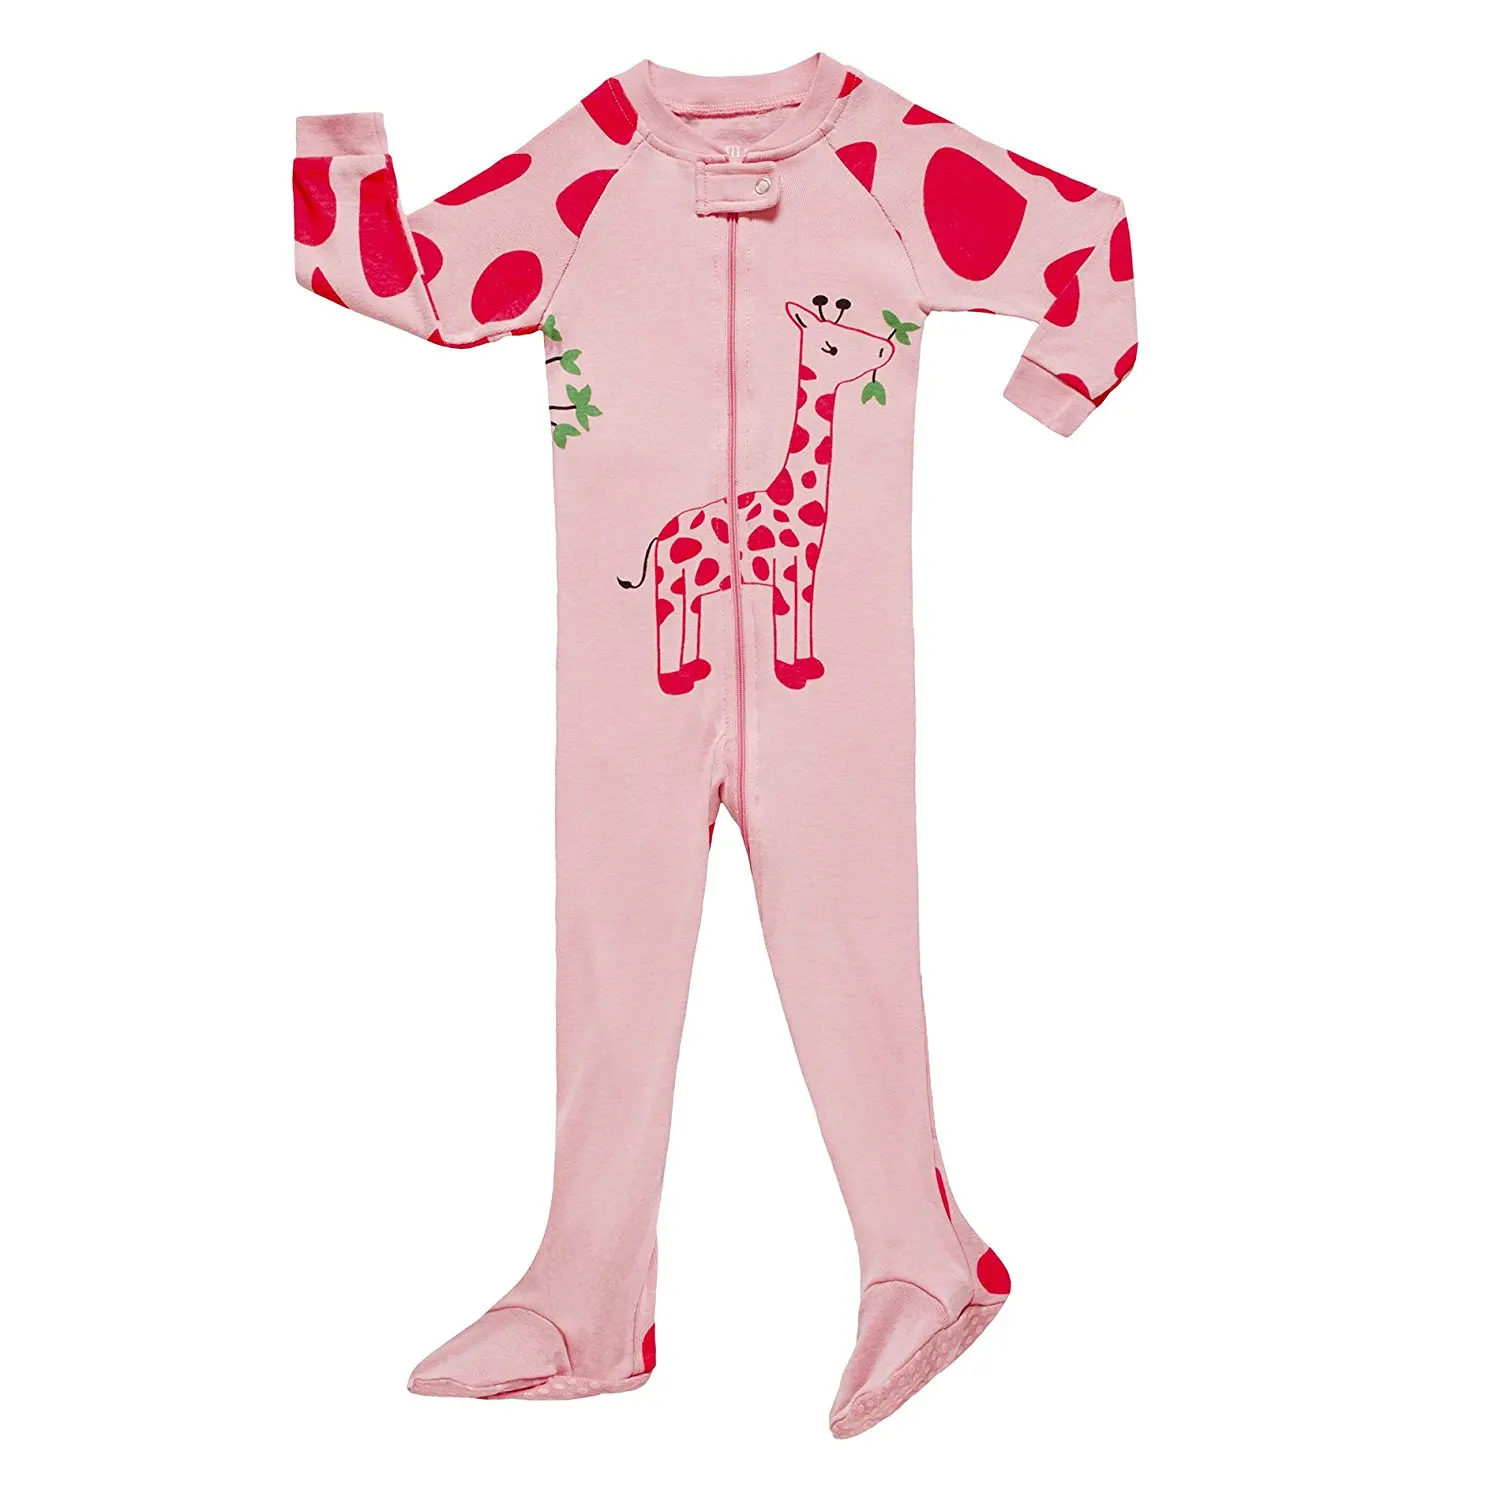 100/% Cotton Baby Boys Girls Pajamas Set Long Sleeve Sleepwear 6M-5Years